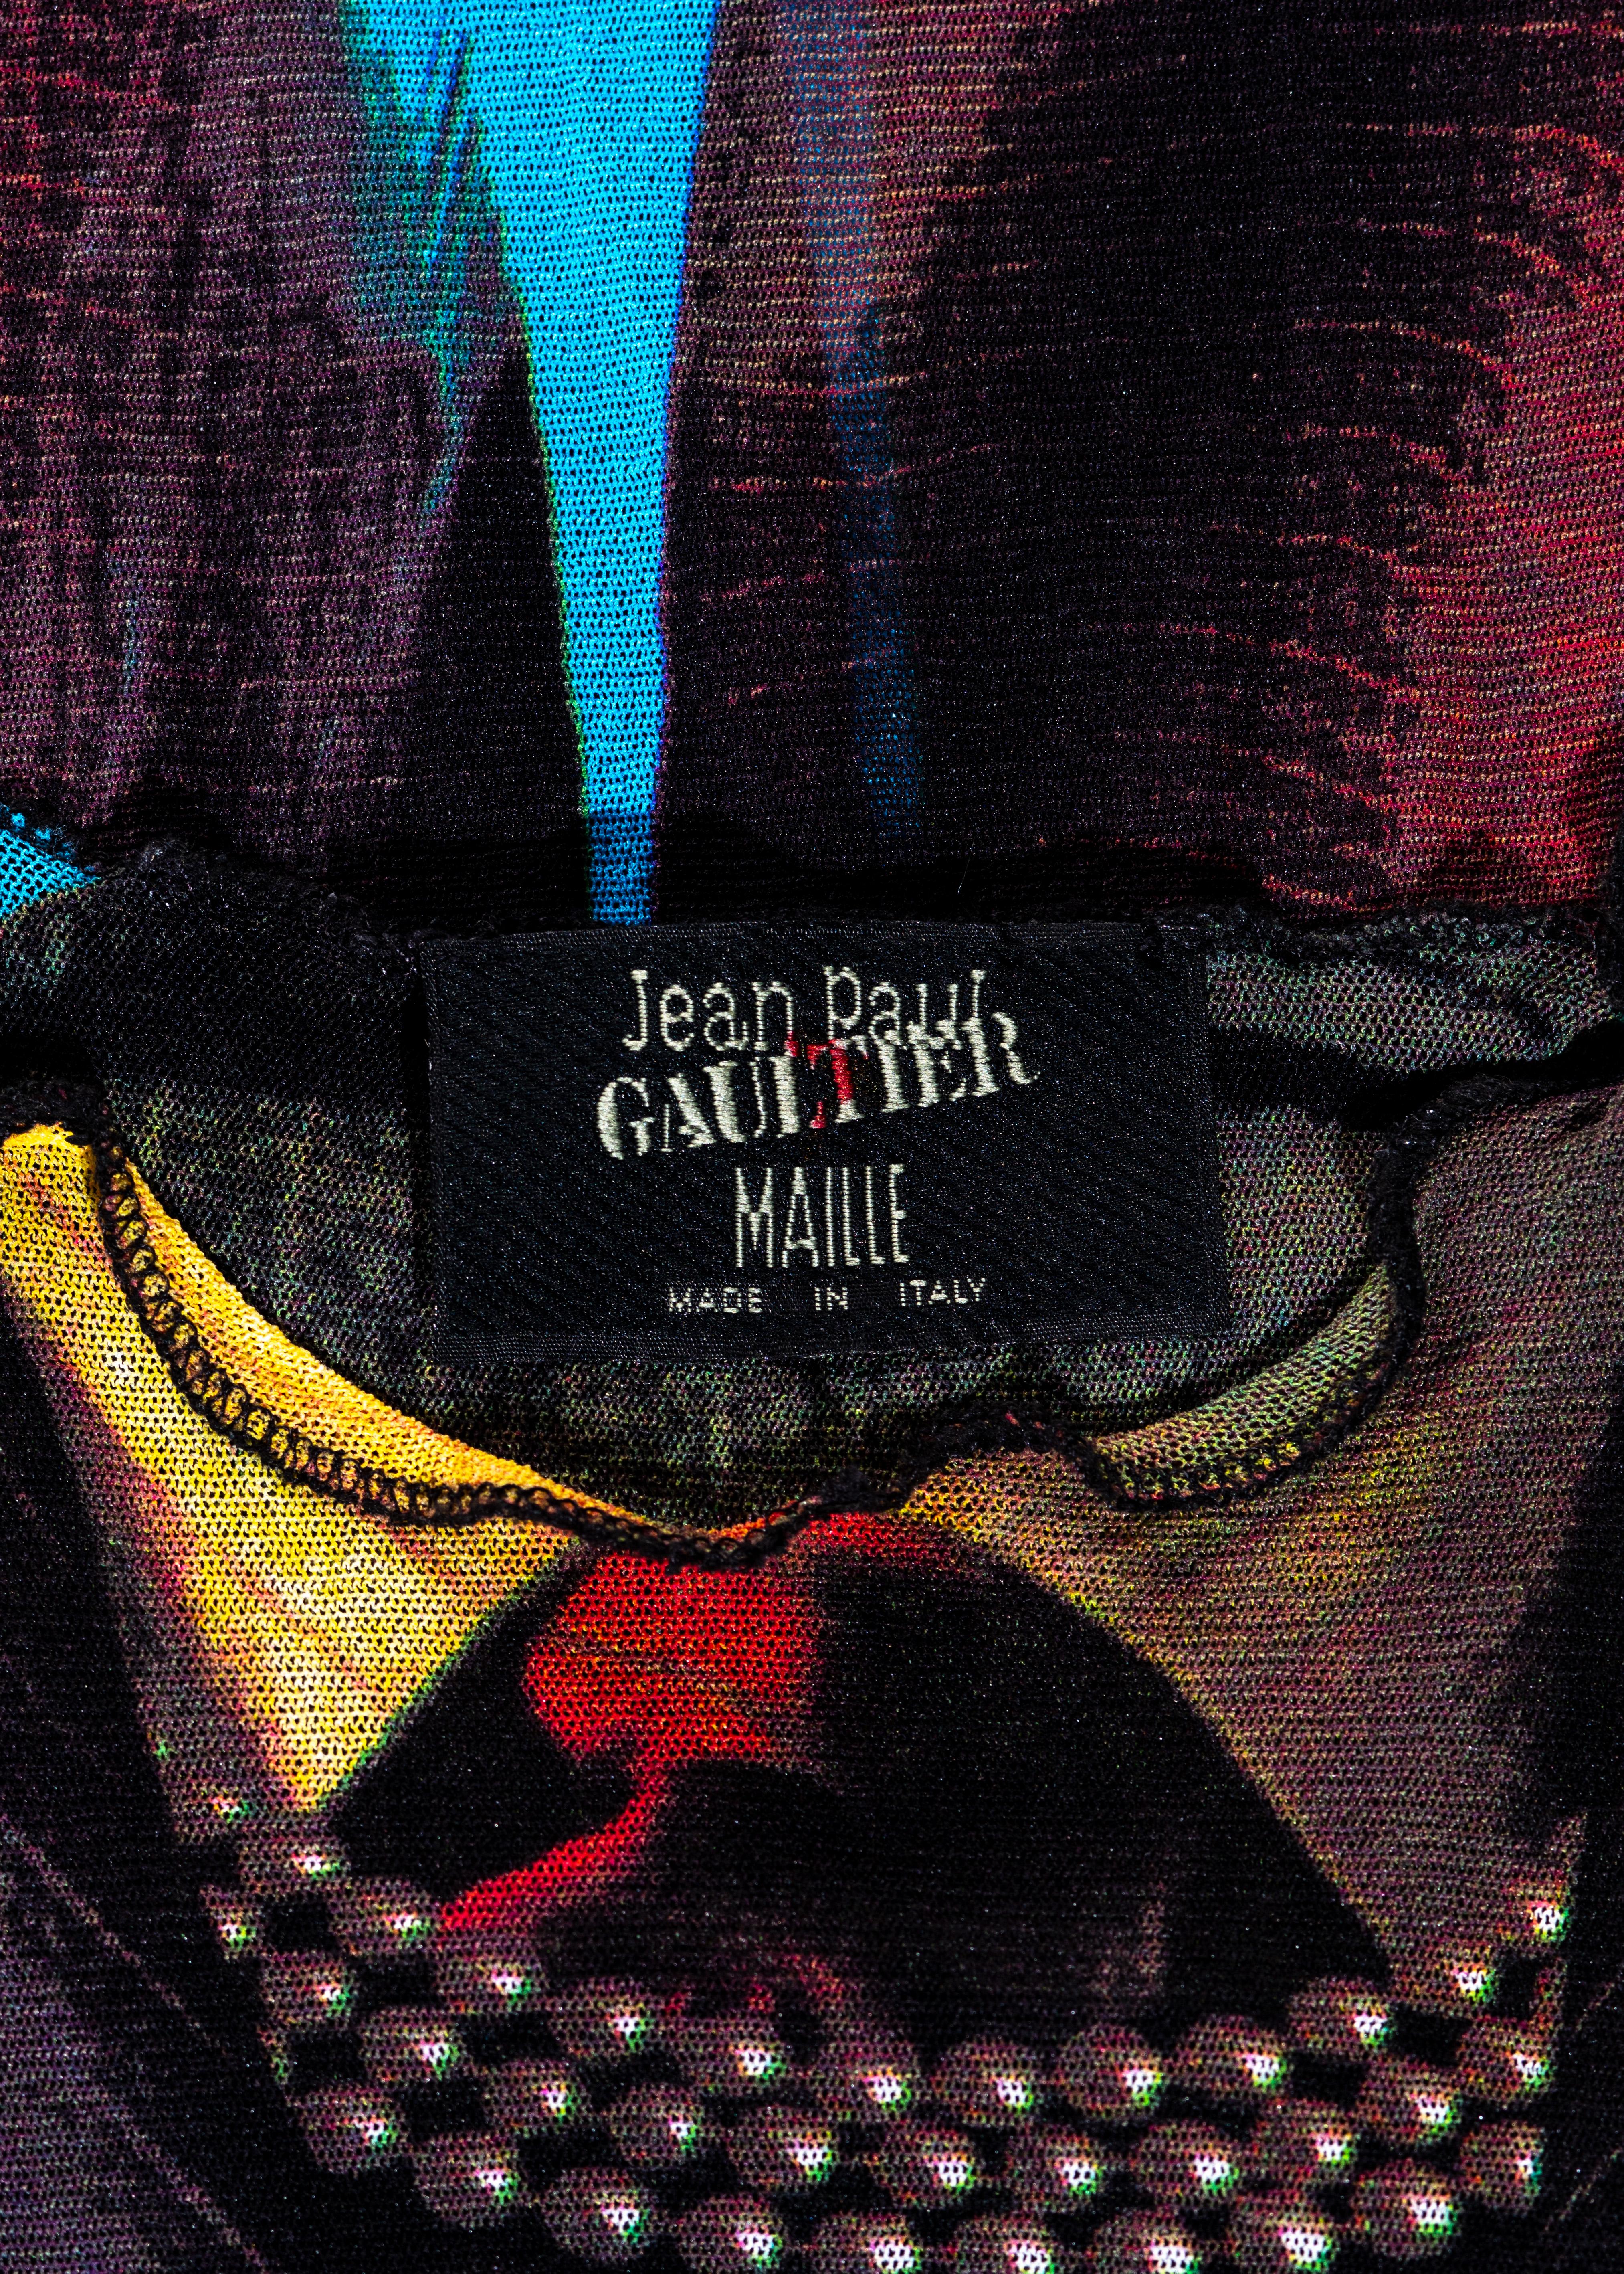 Jean Paul Gaultier multicoloured printed mesh bodycon dress, ss 1997 6